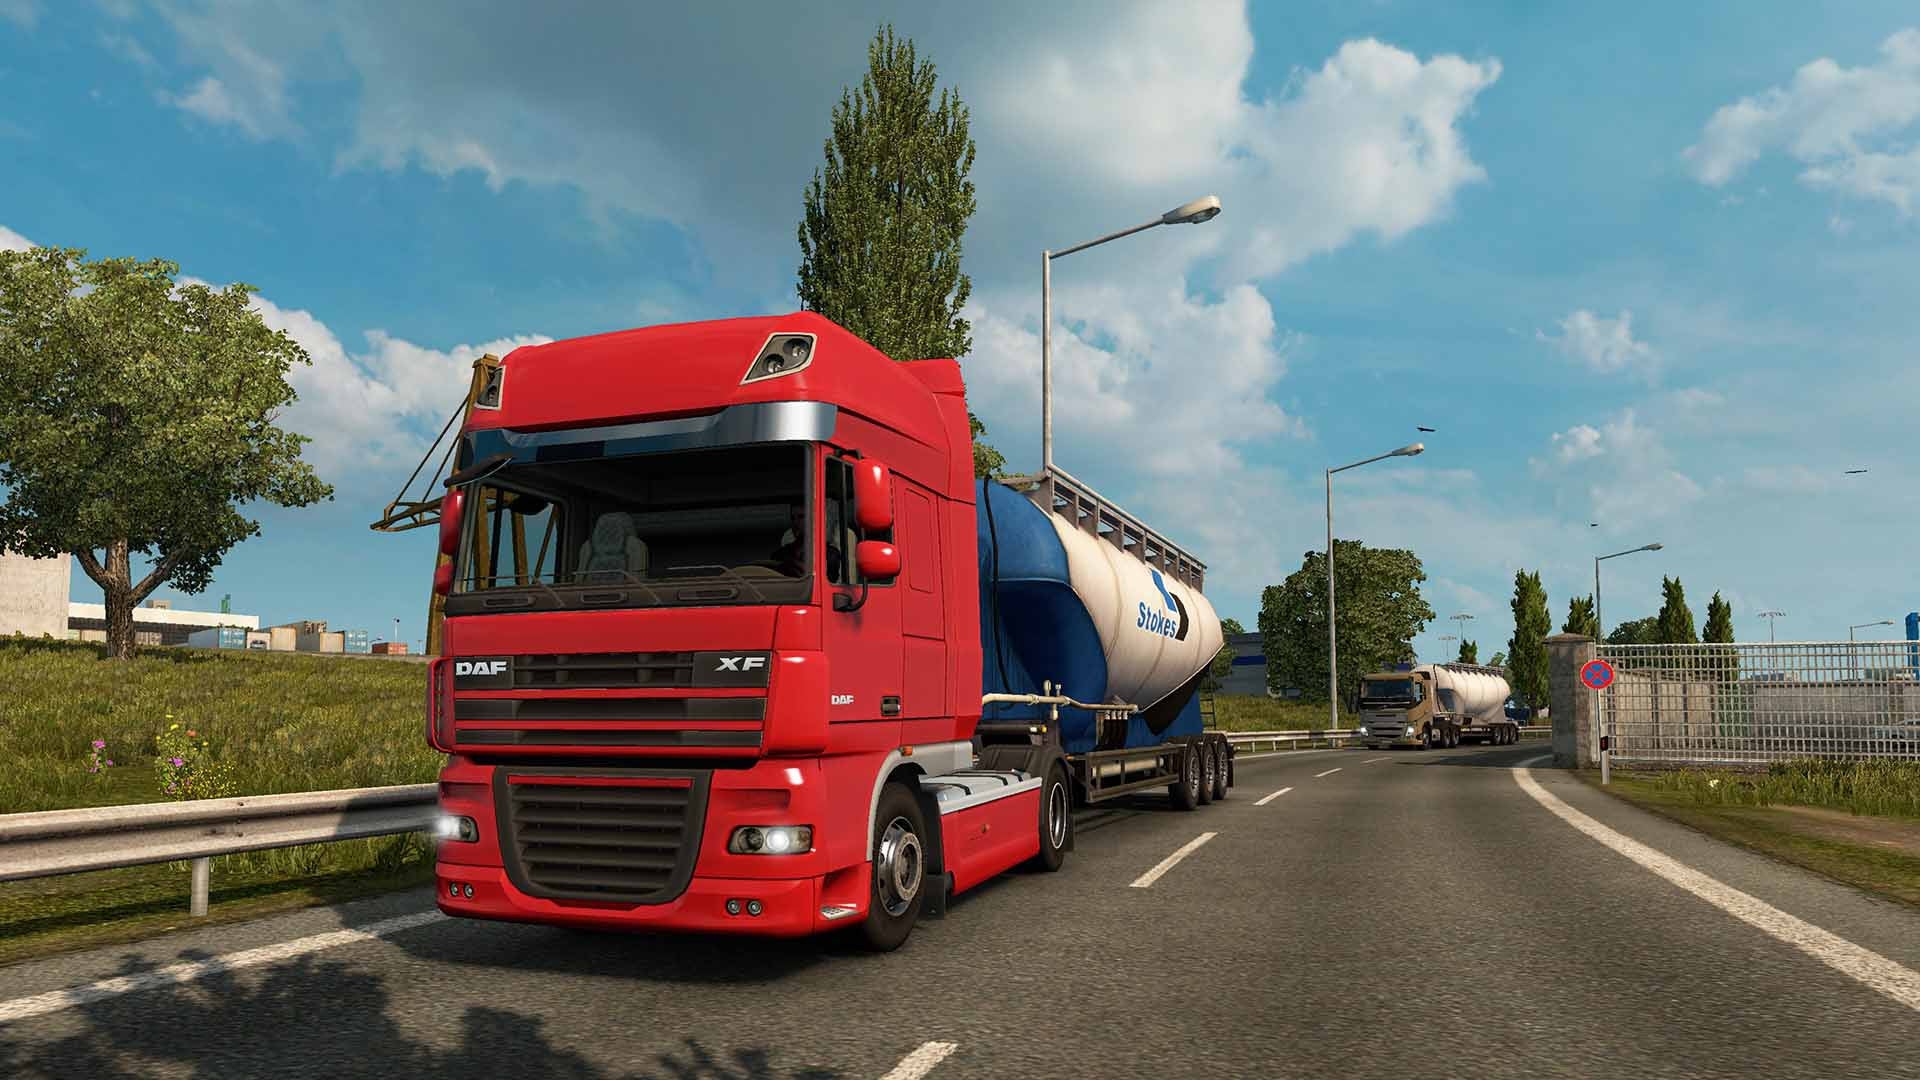 Euro Truck Simulator 2 PC Version Full Game Free Download